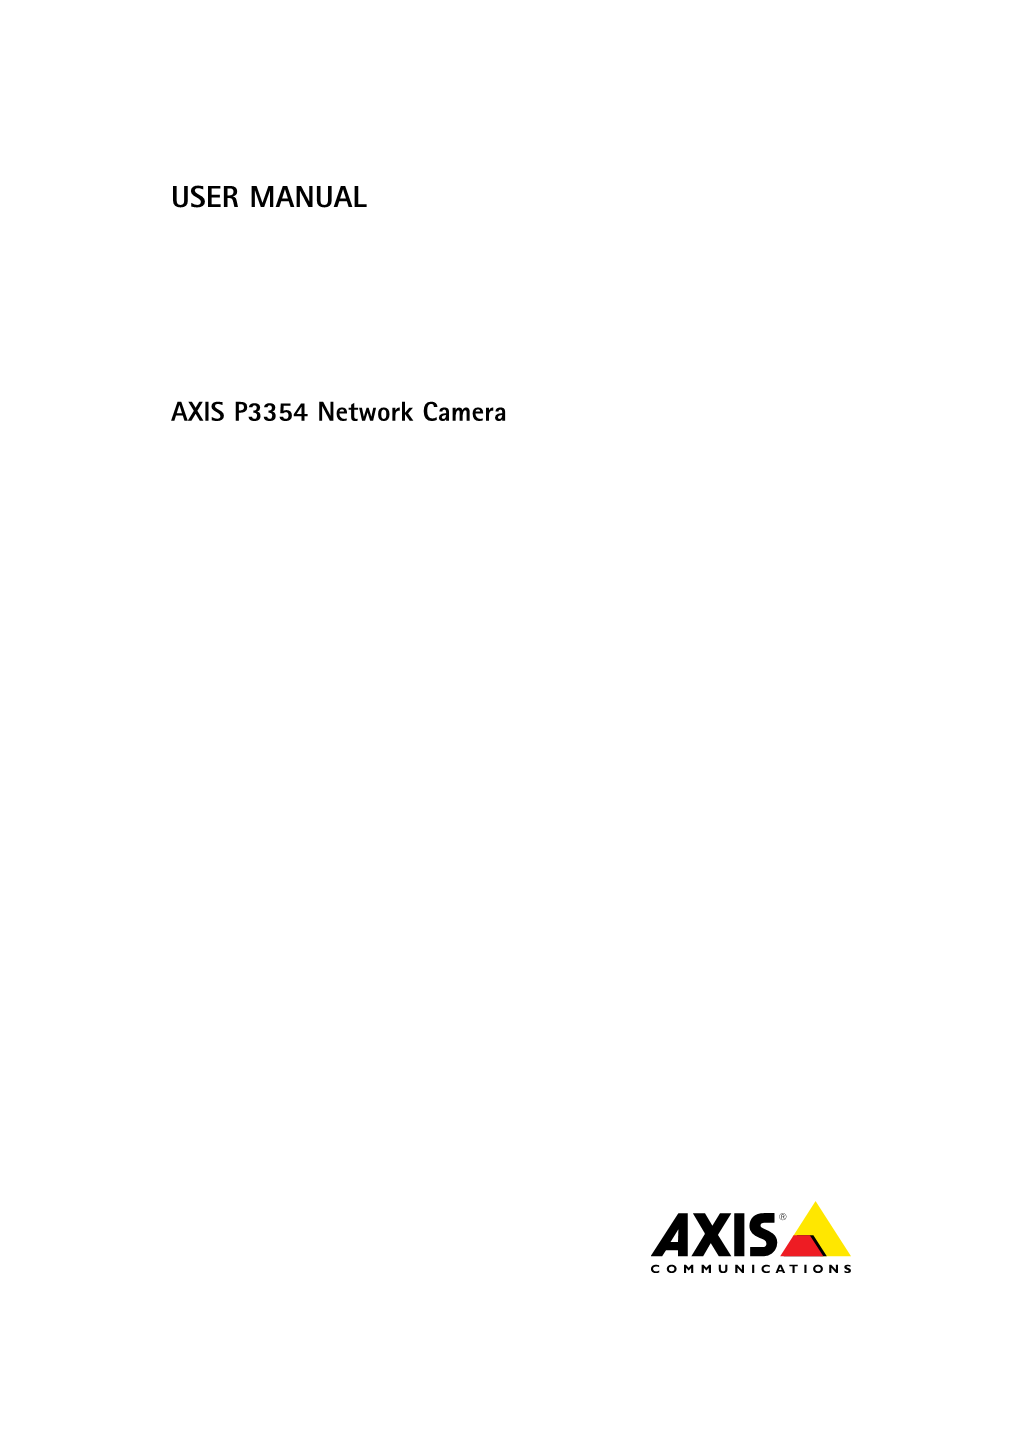 AXIS P3354 Network Camera